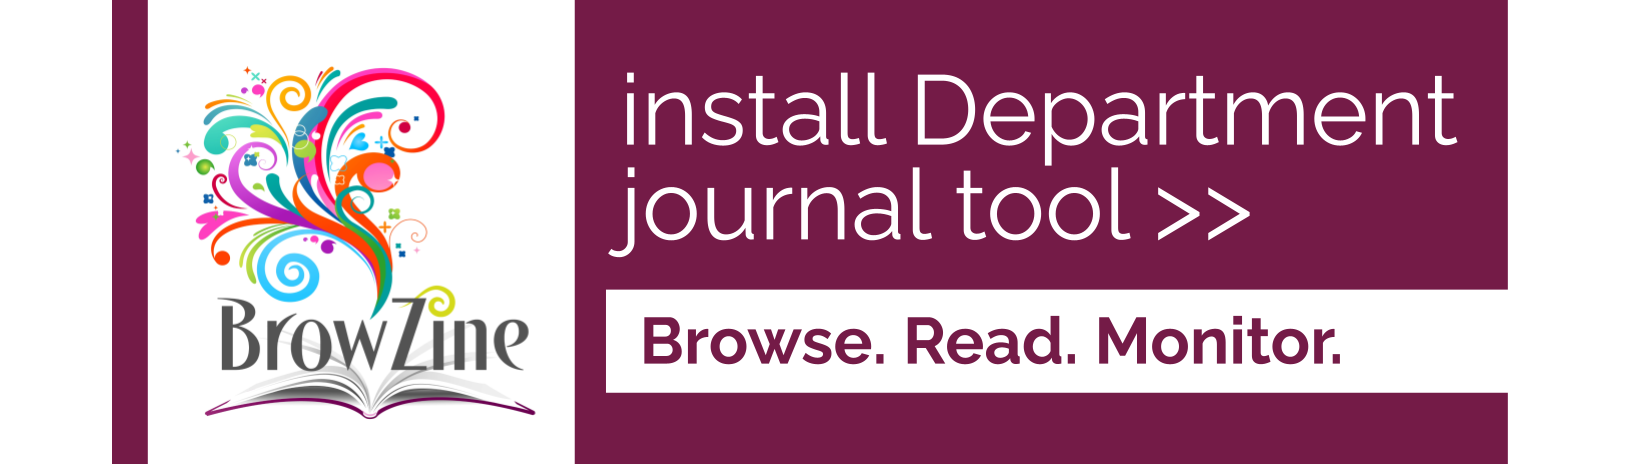 Install Department journal tool Browzine